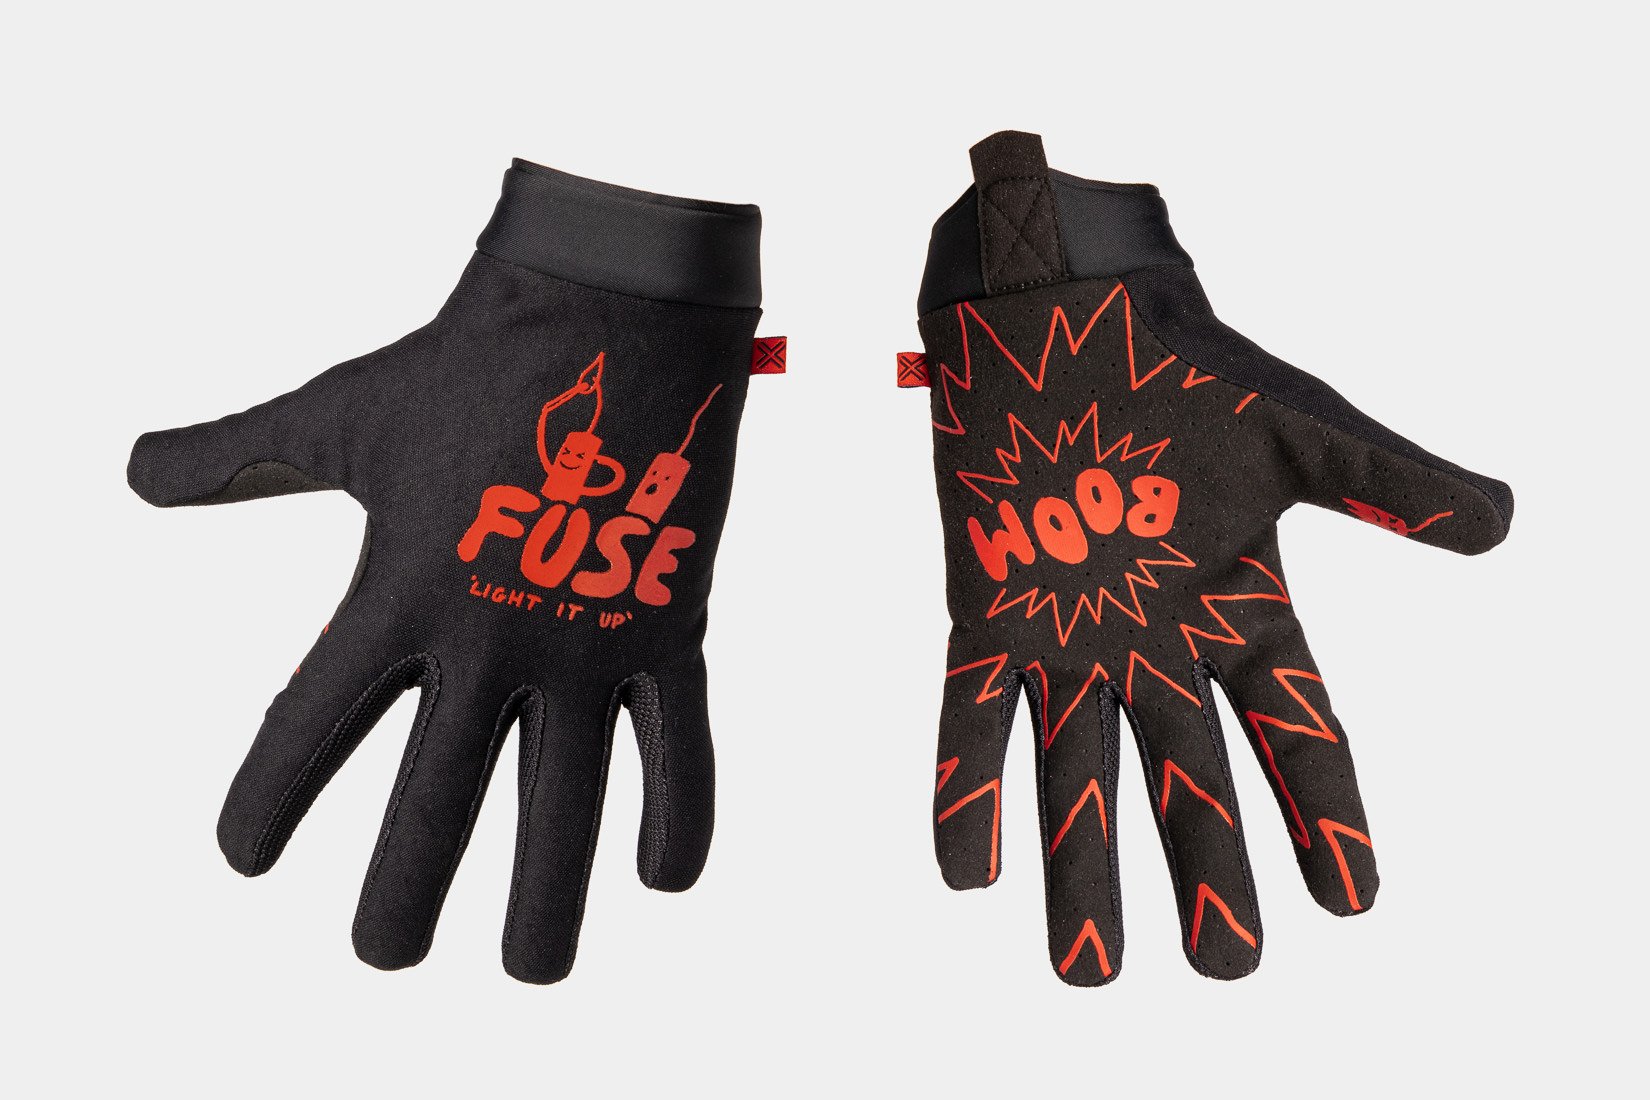 Перчатки хамелеон. Перчатки бмх fuse. Fuse Omega Gloves. Перчатки для бмх. Защитные перчатки Omega.